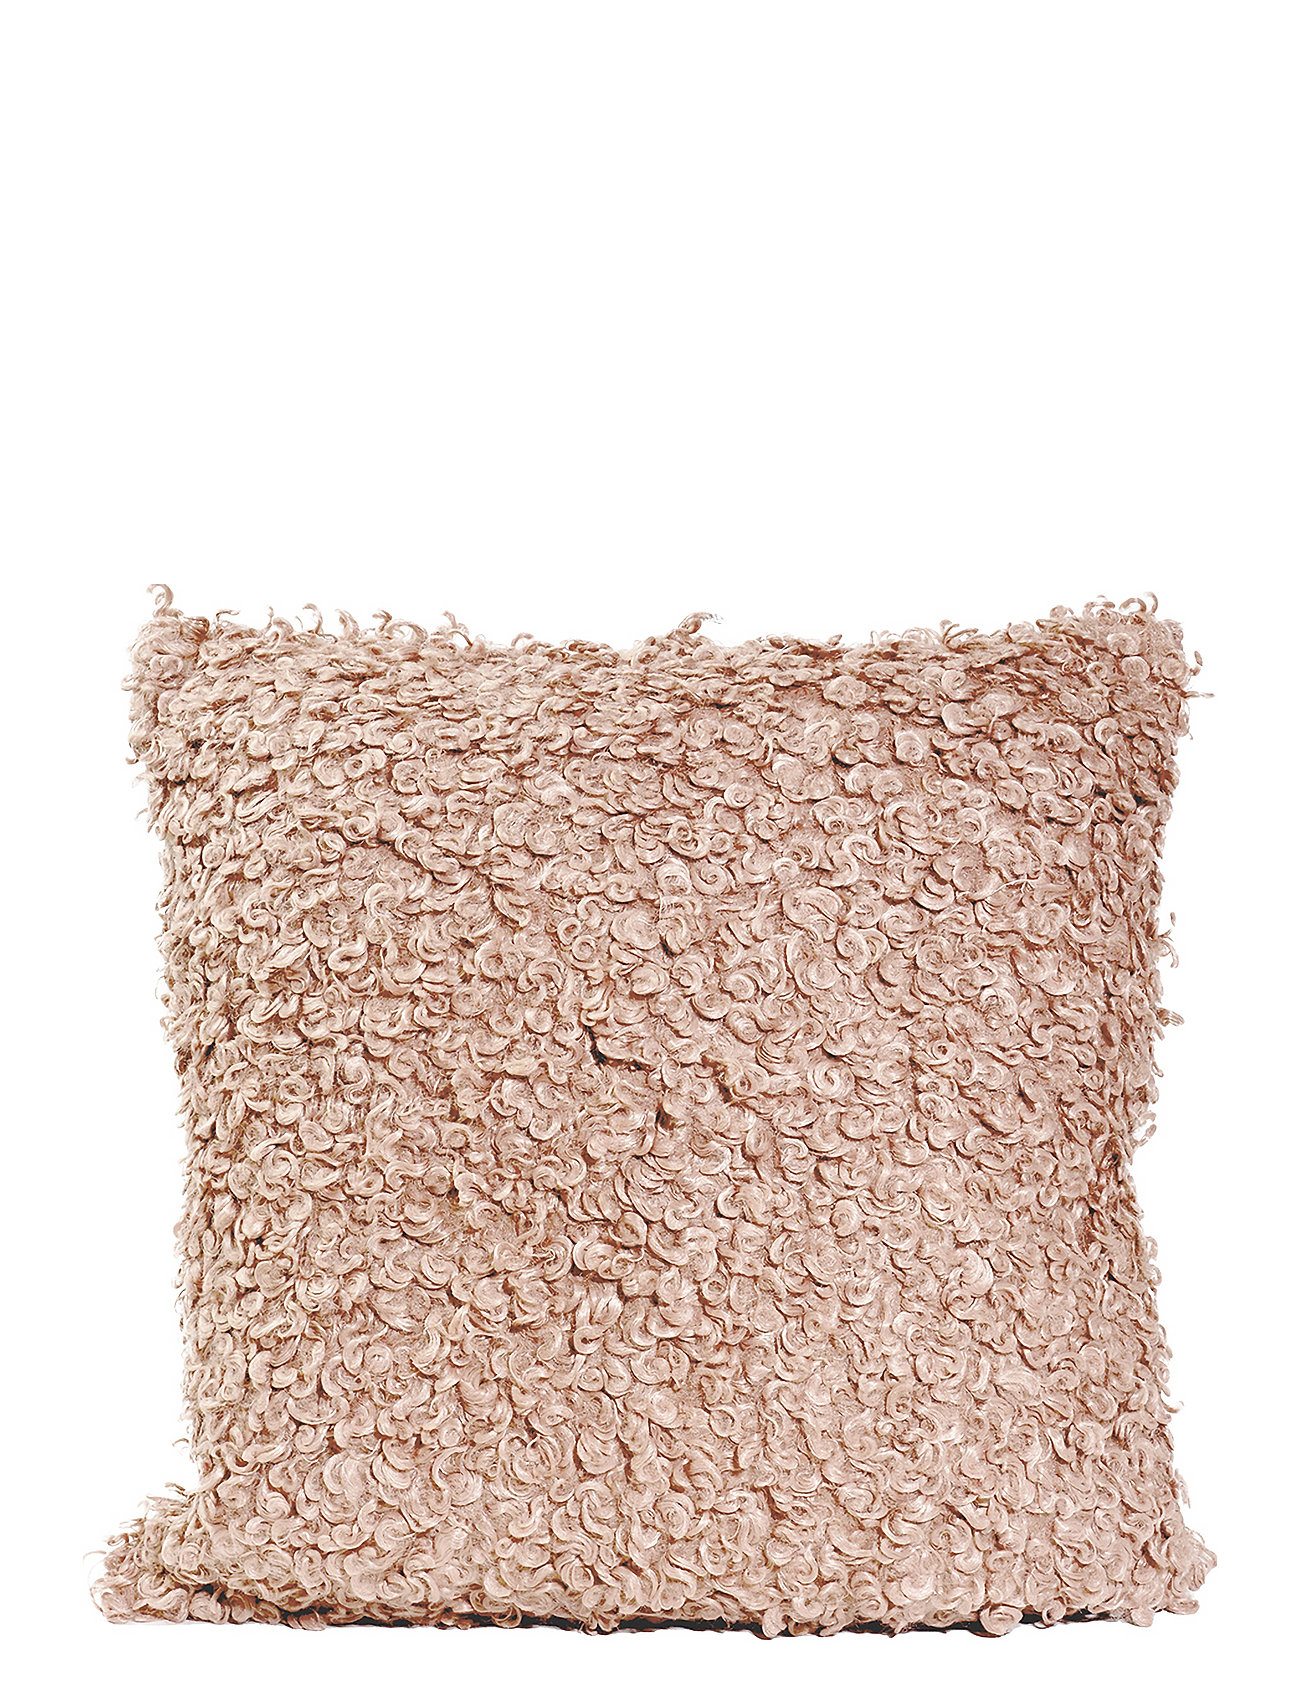 Curly Lamb Fake Fur C/C 50X50 Home Textiles Cushions & Blankets Cushion Covers Pink Ceannis